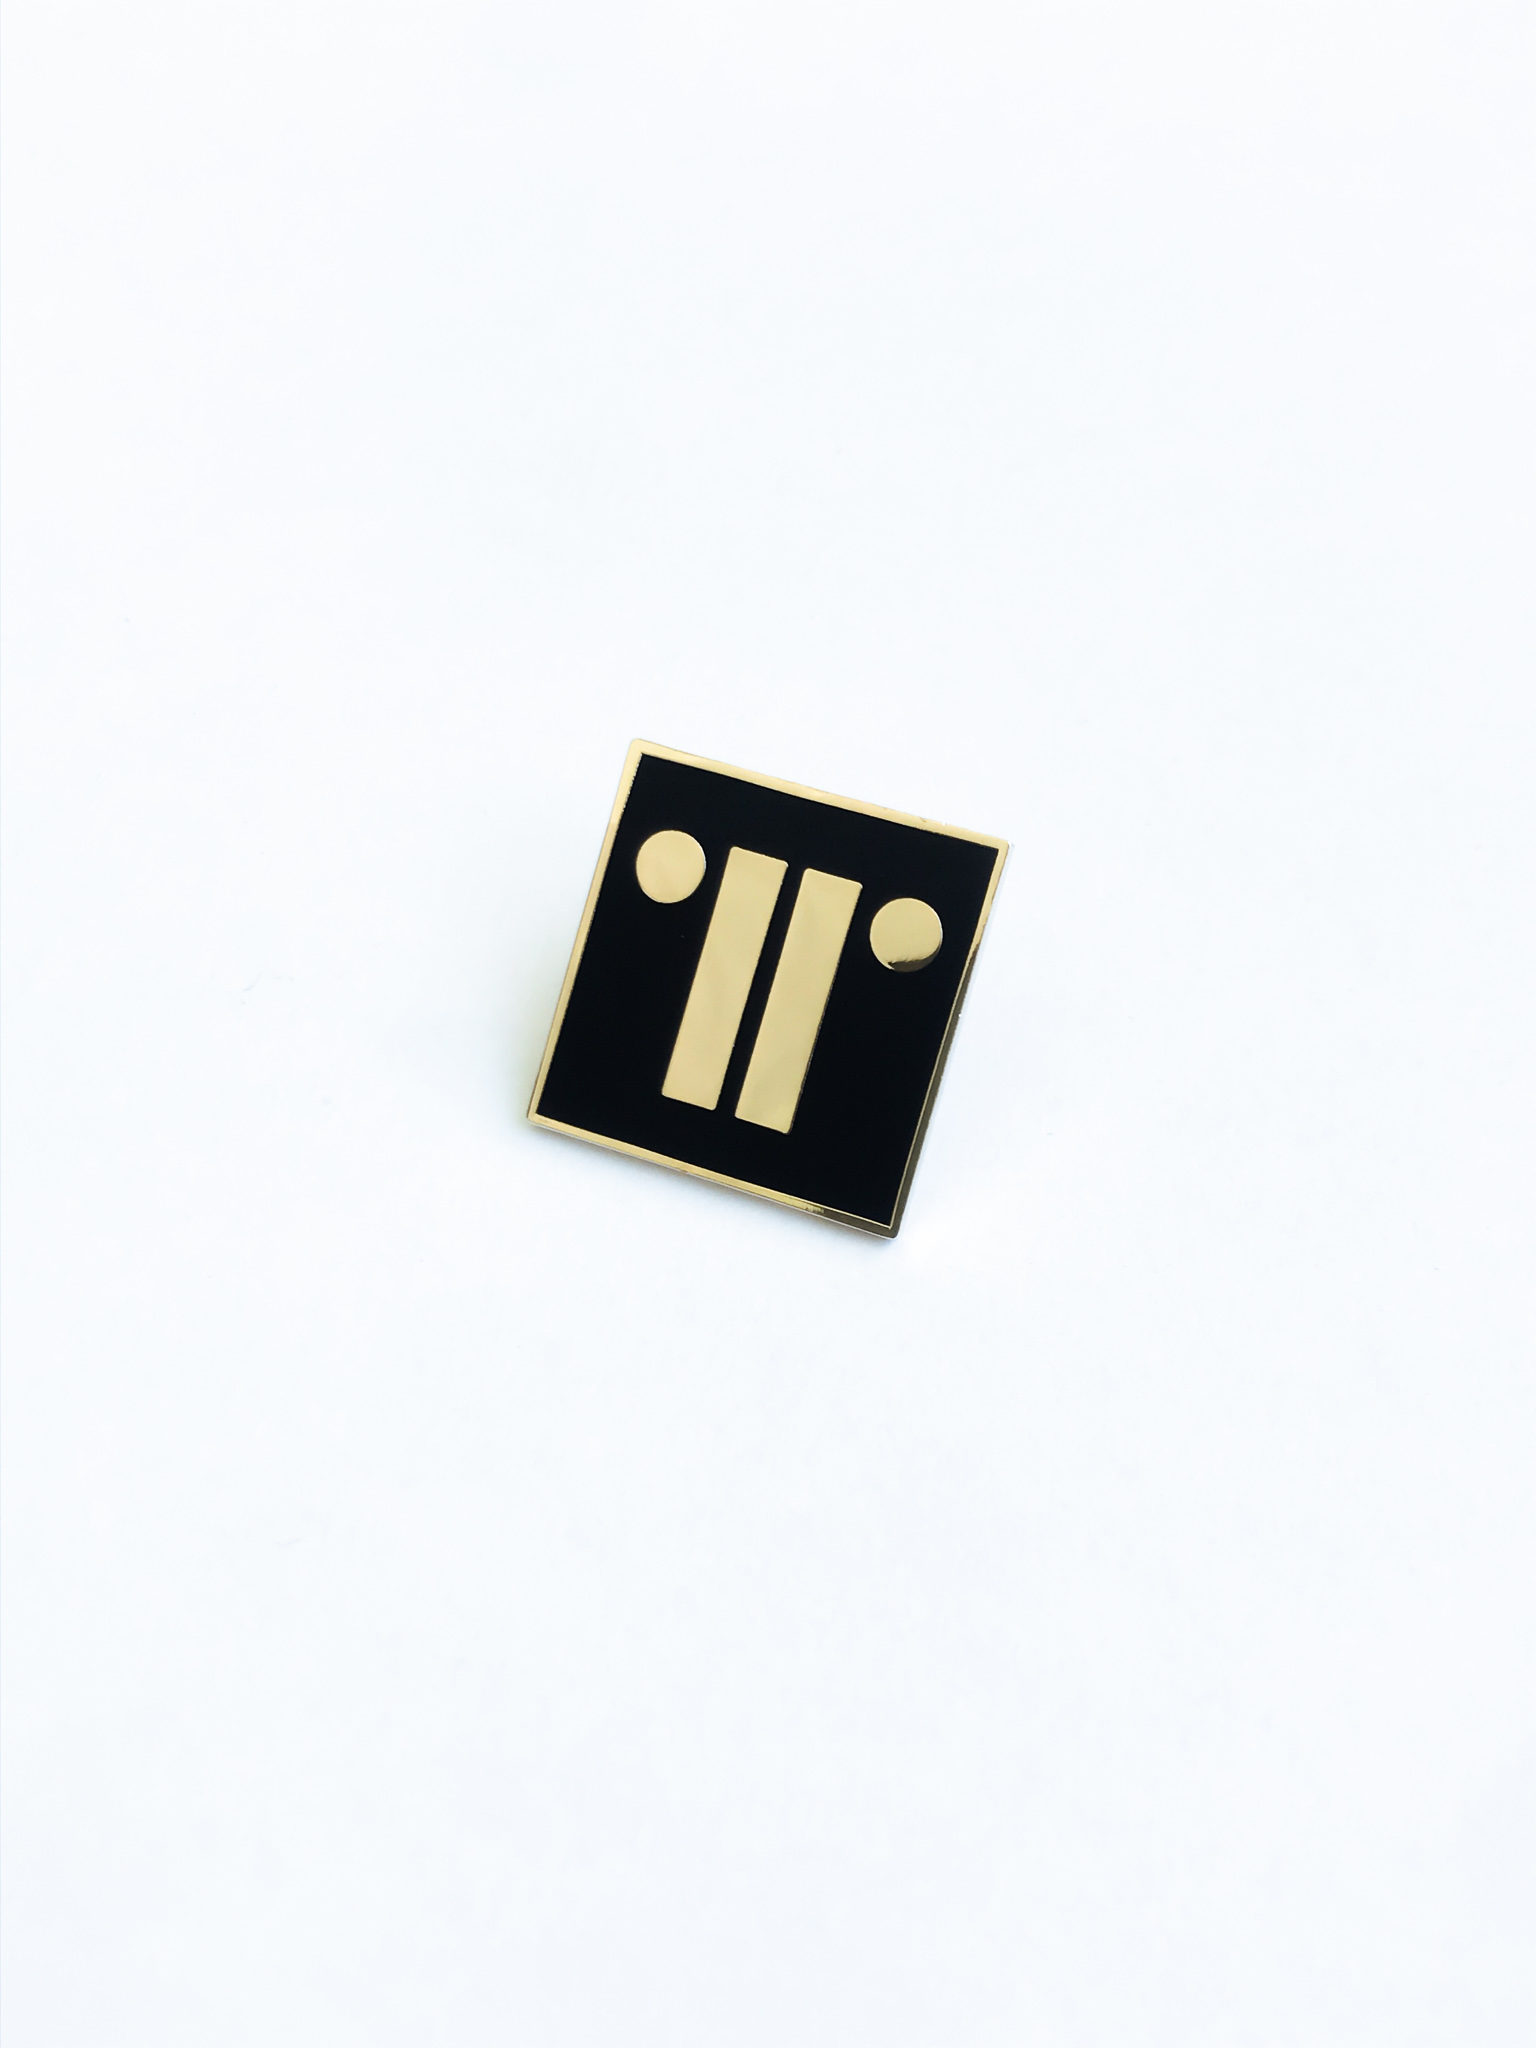 Gold badge with black enamel paint on white background.